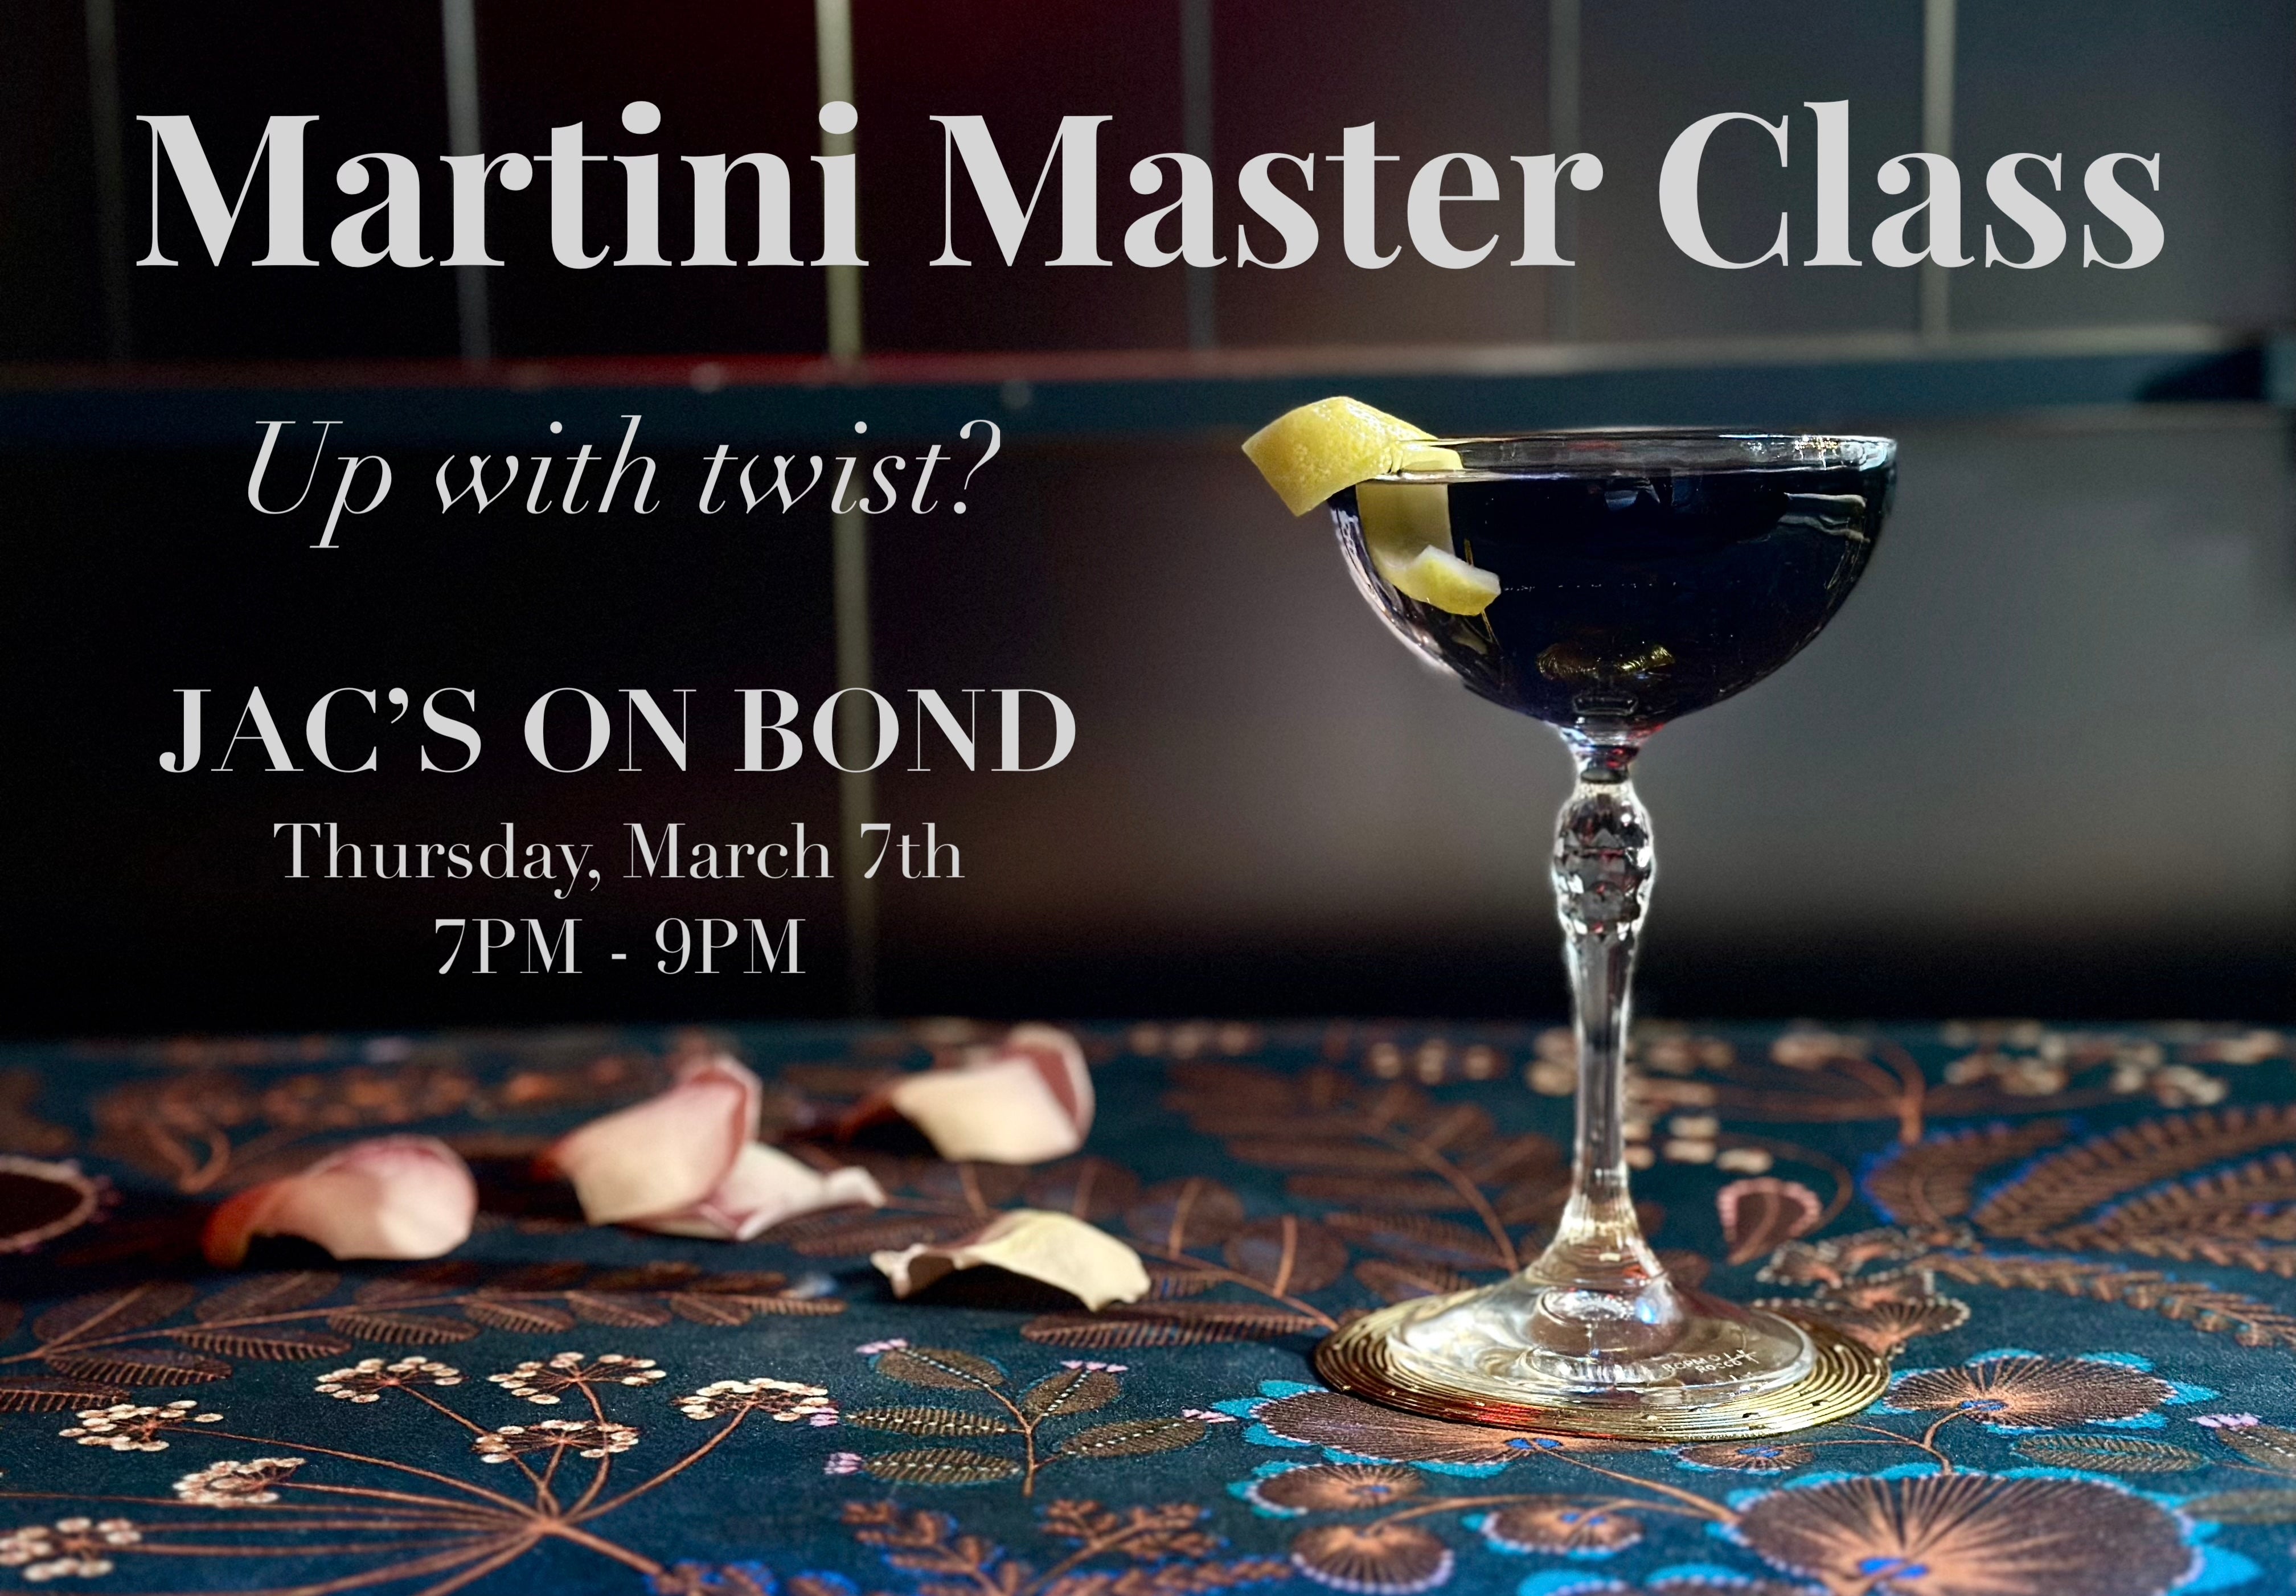 Martini Master Class Soirée!